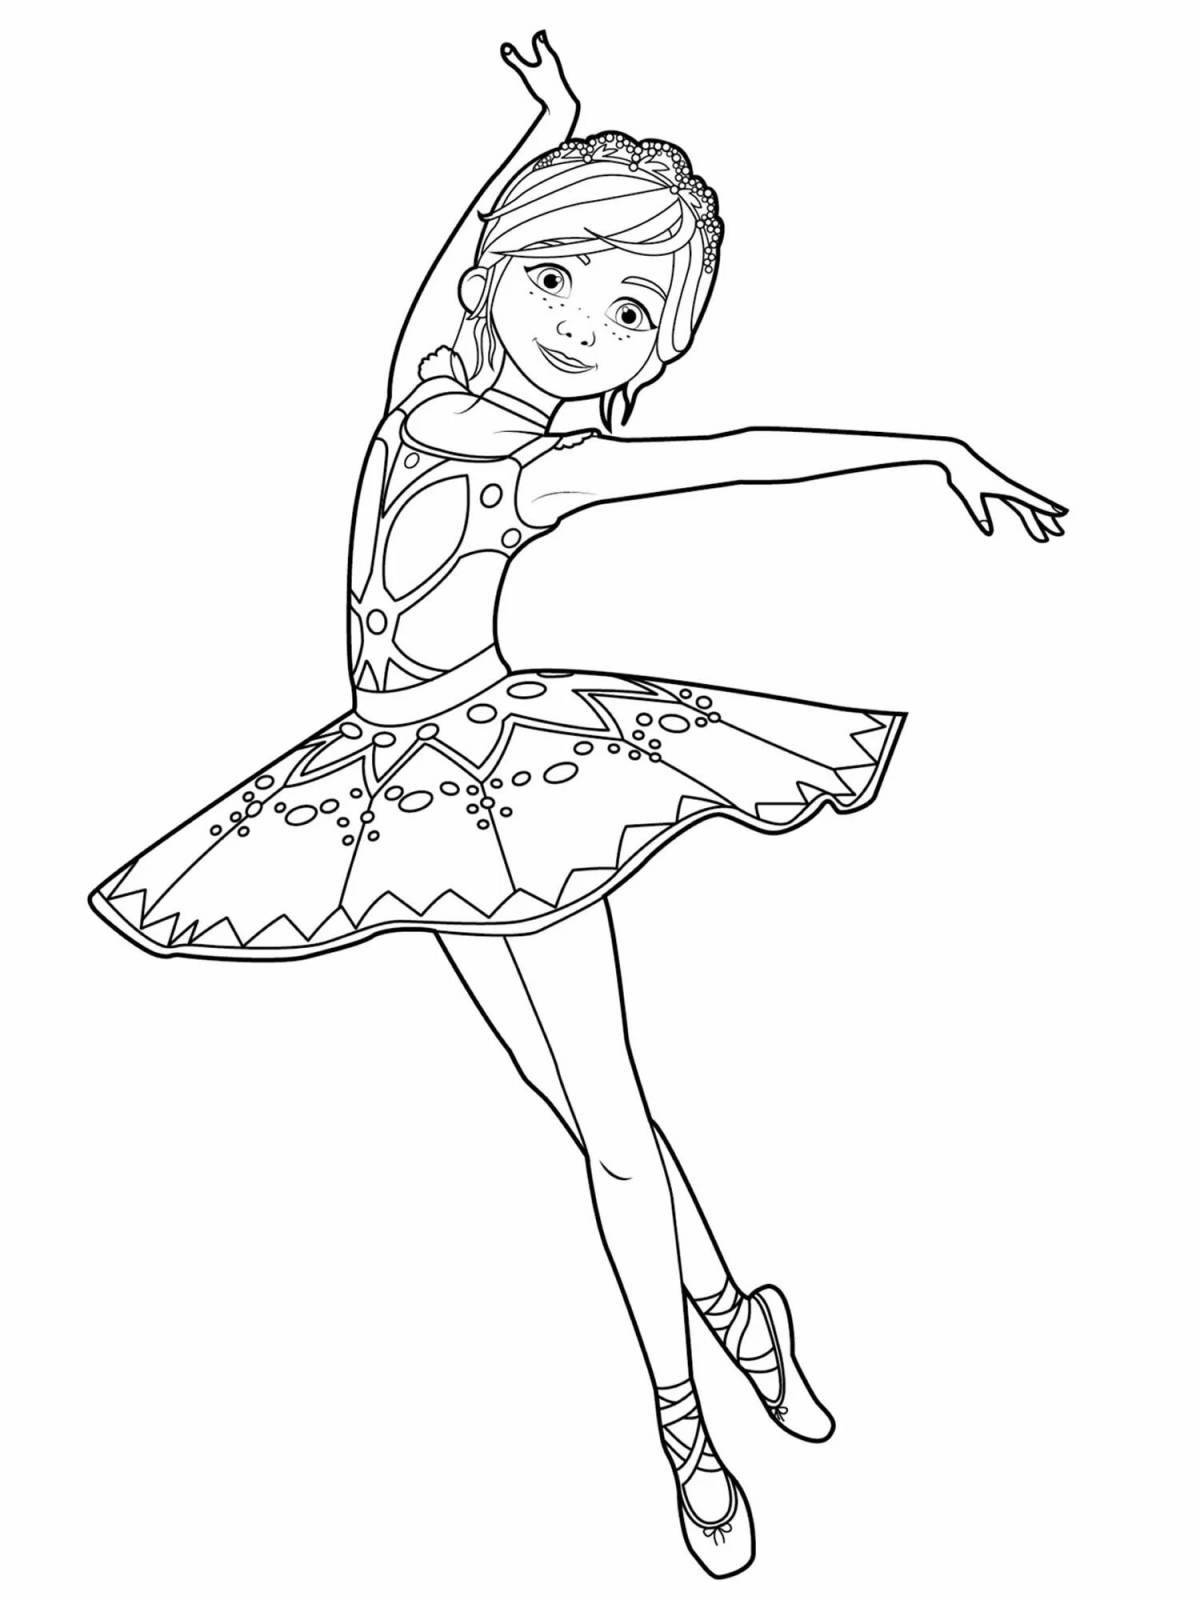 Coloring page joyful ballerina